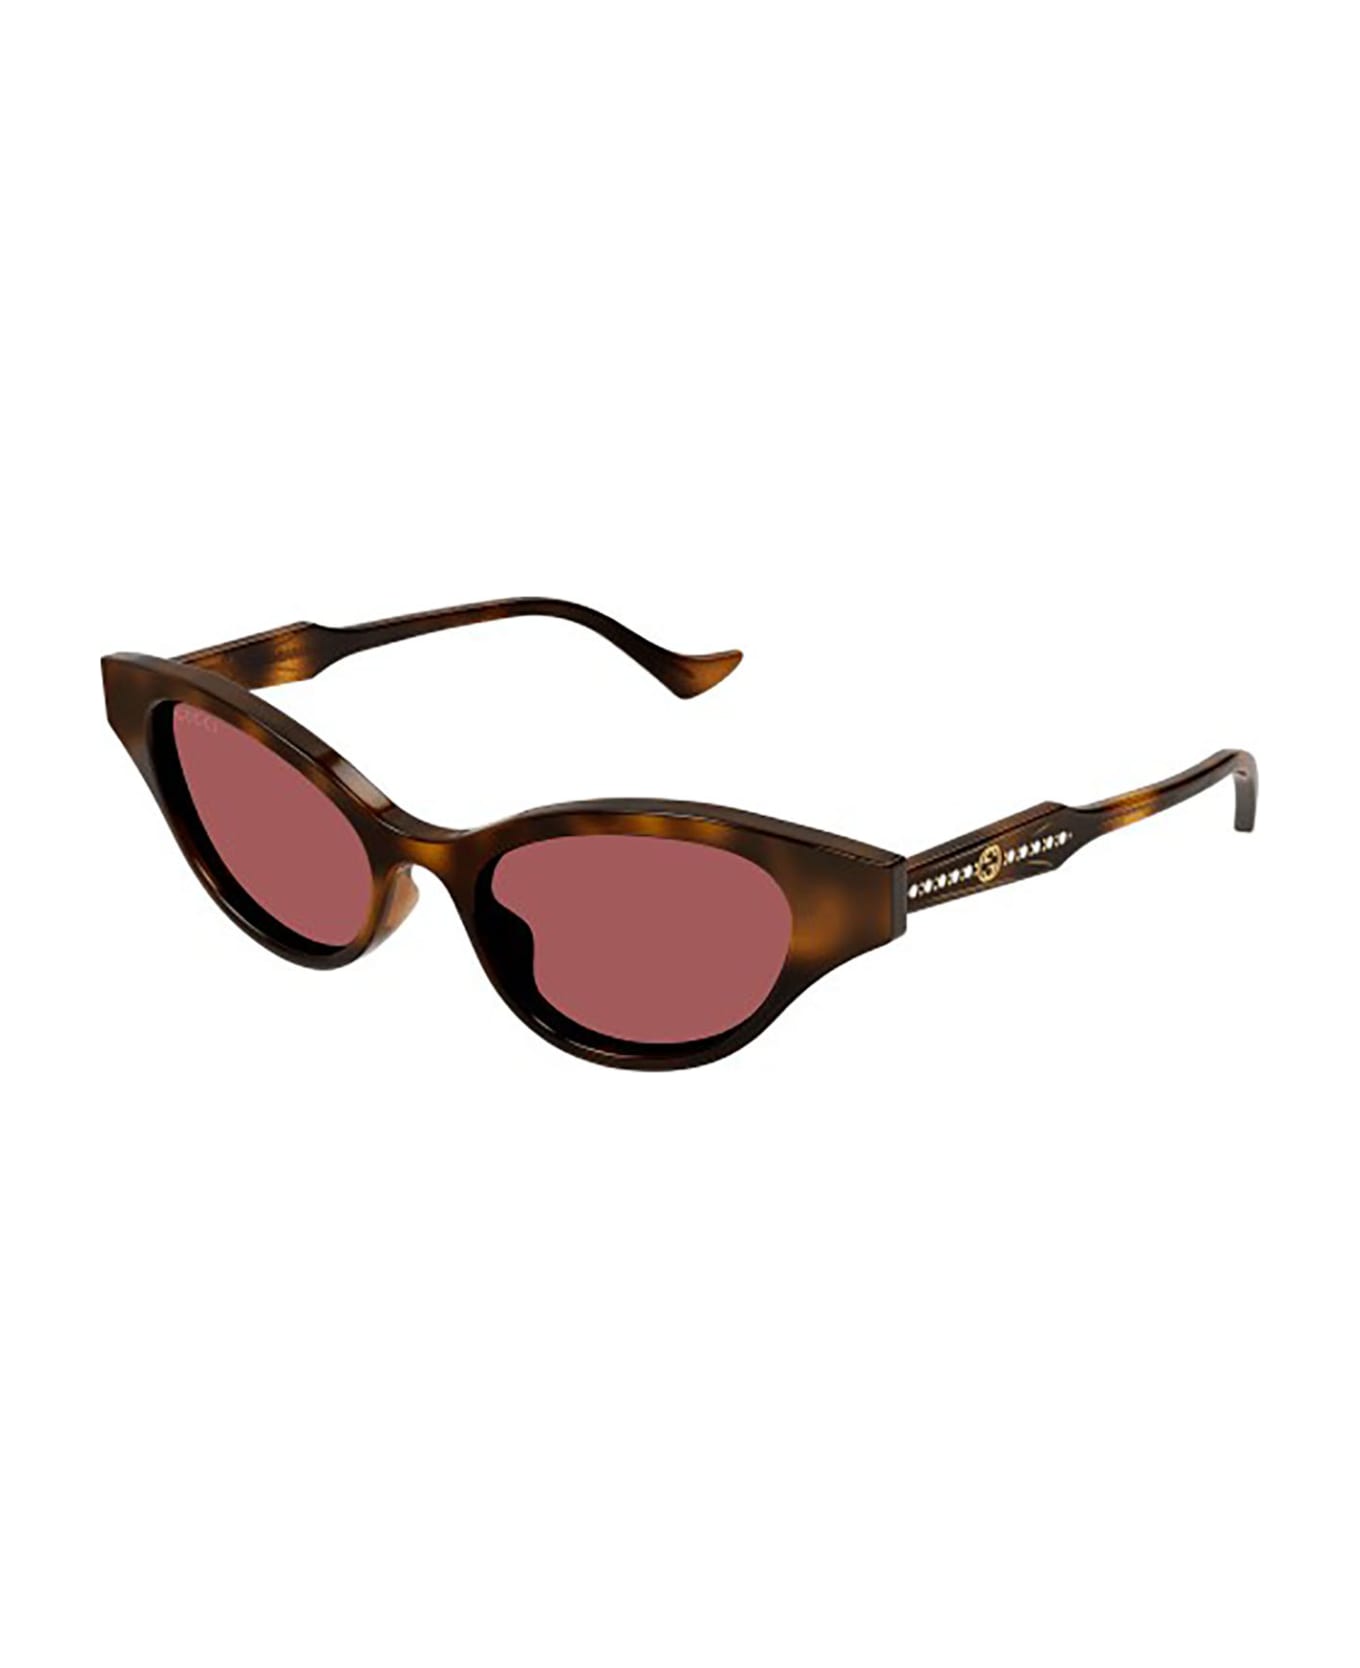 Gucci Eyewear Gg1298s Sunglasses - HAVANA-HAVANA-BROWN